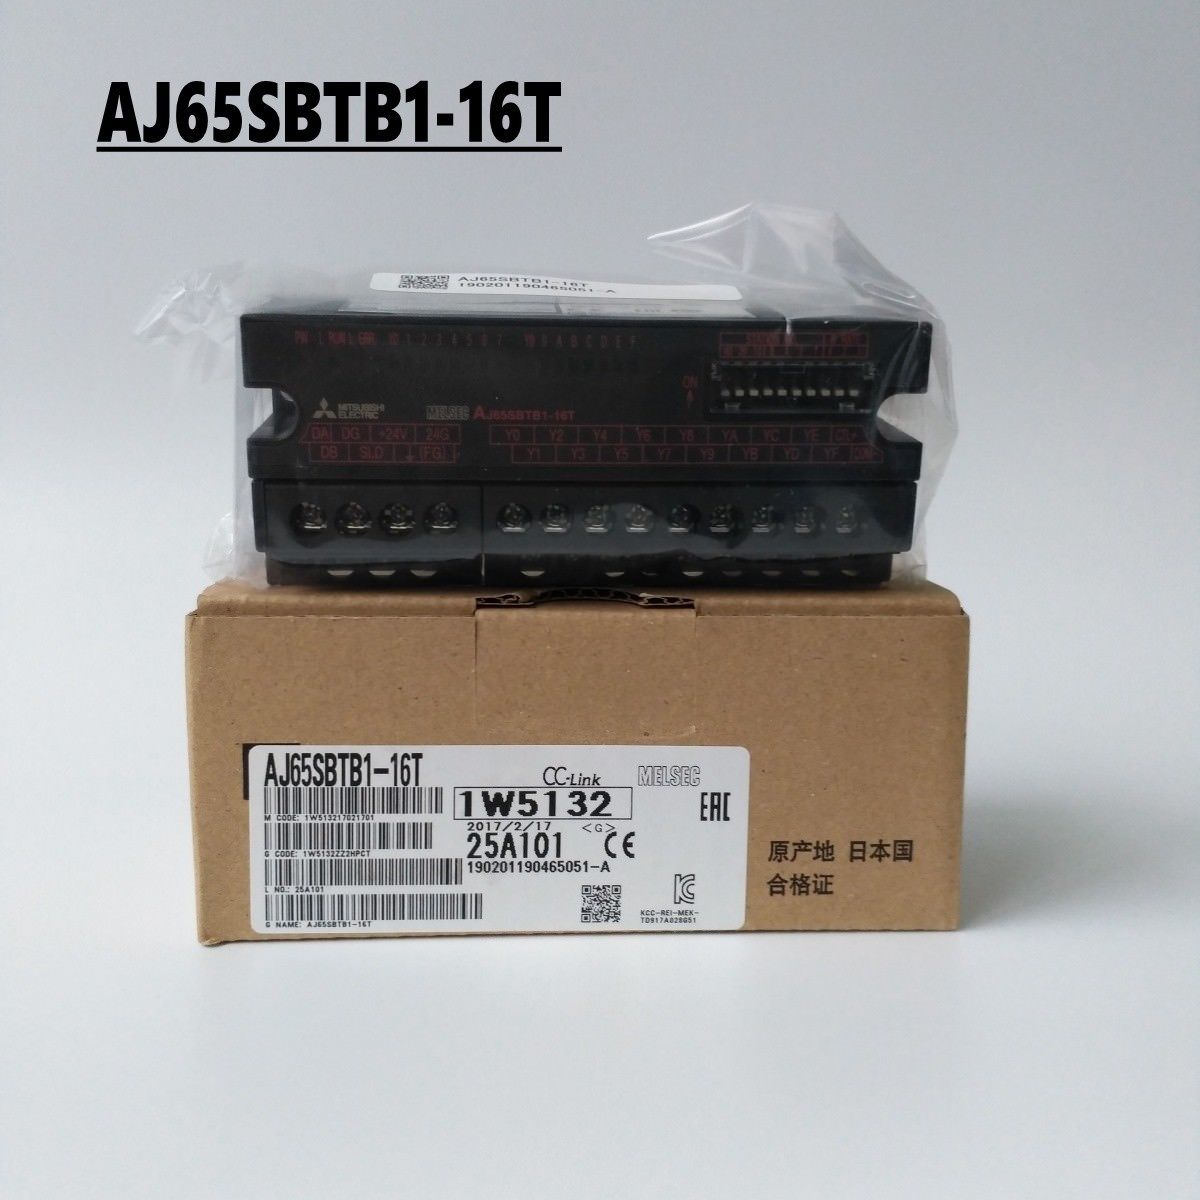 Brand New MITSUBISHI PLC AJ65SBTB1-16T In Box AJ65SBTB116T